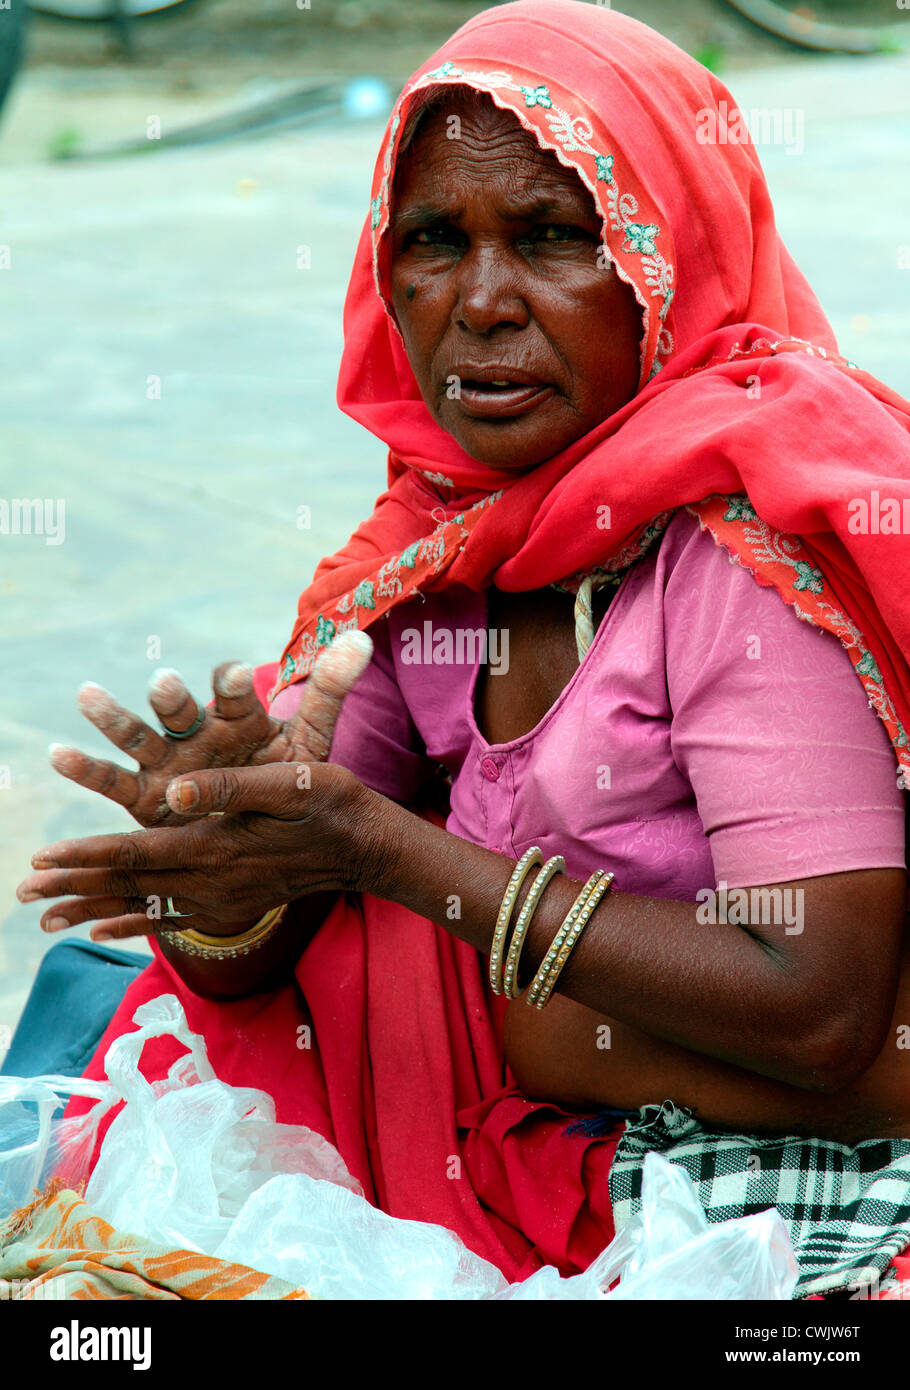 Old woman,market,India,Indian culture,market vendor,bazaar, street vendor,Road side,Descriptive color.Traditionally Indian. Stock Photo